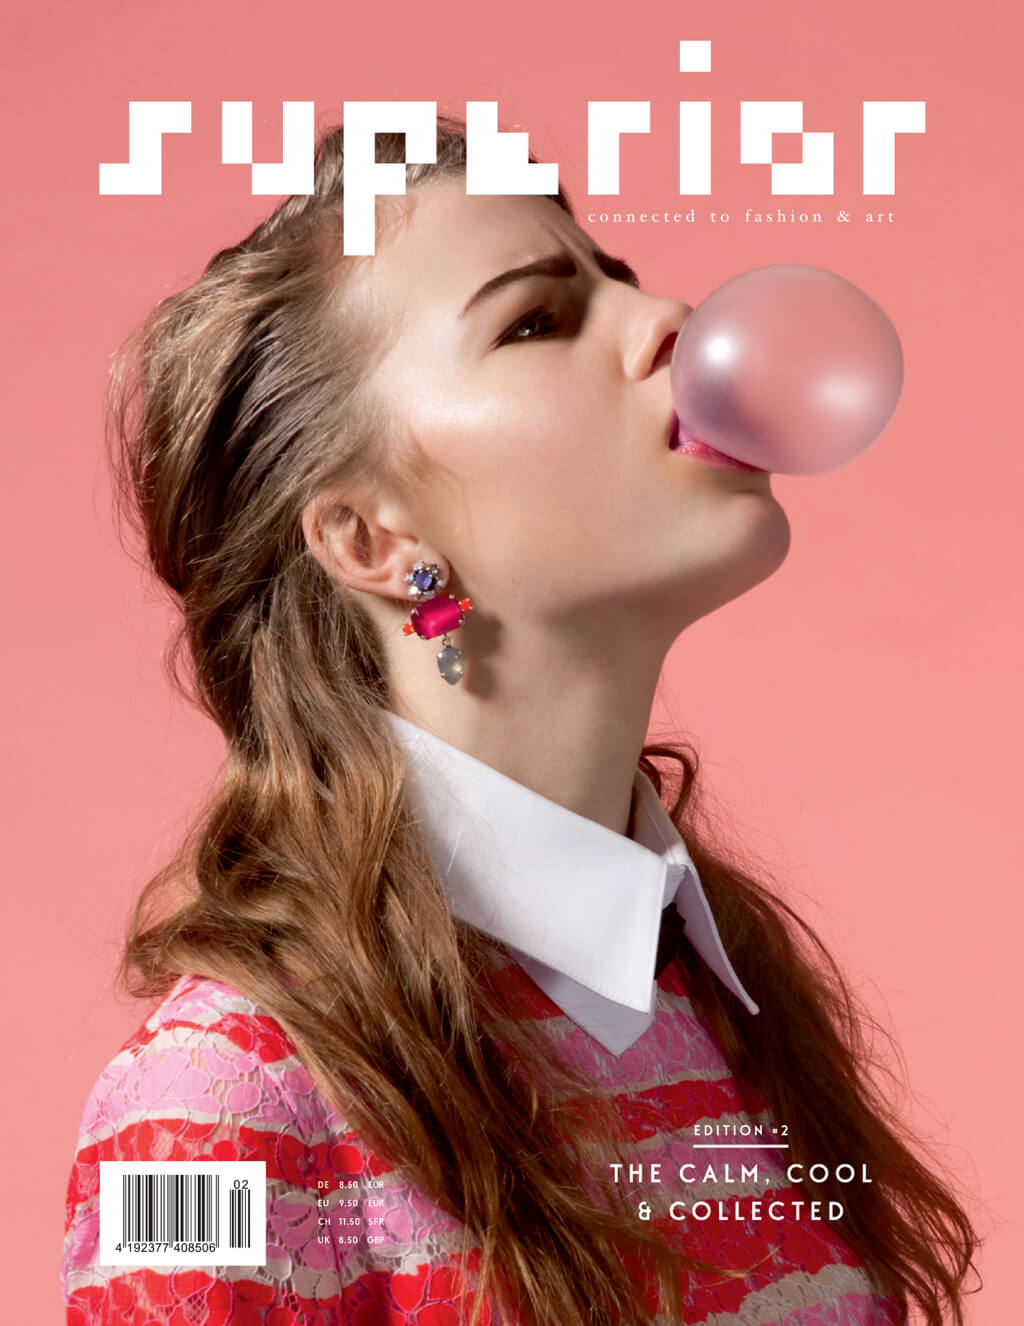 Superior Magazine # 2 - Cover by Lauretta Suter